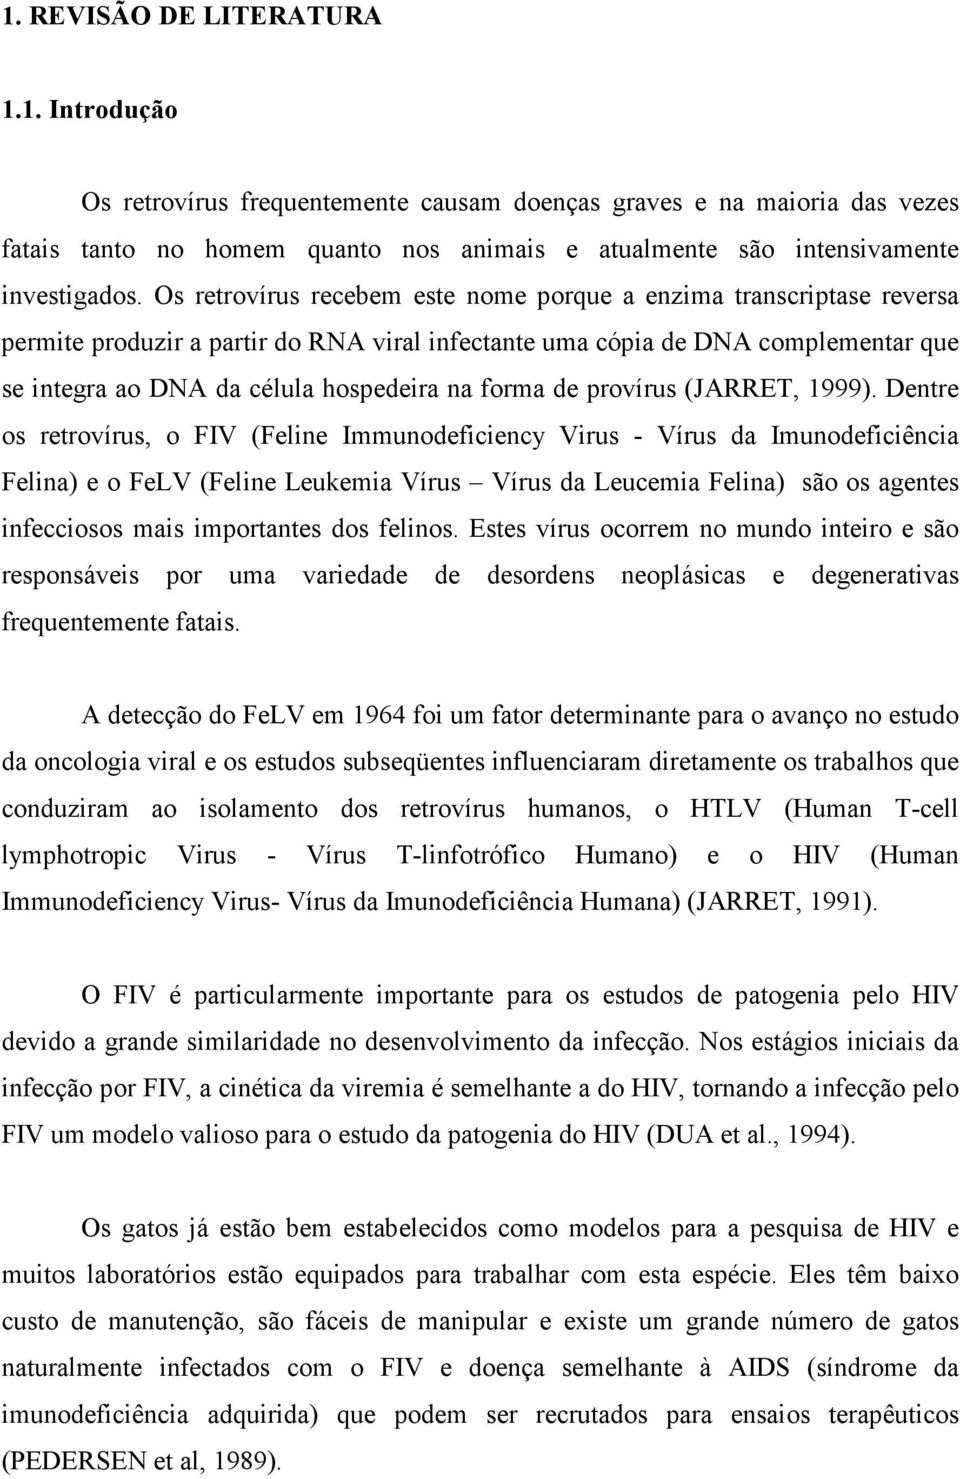 forma de provírus (JARRET, 1999).